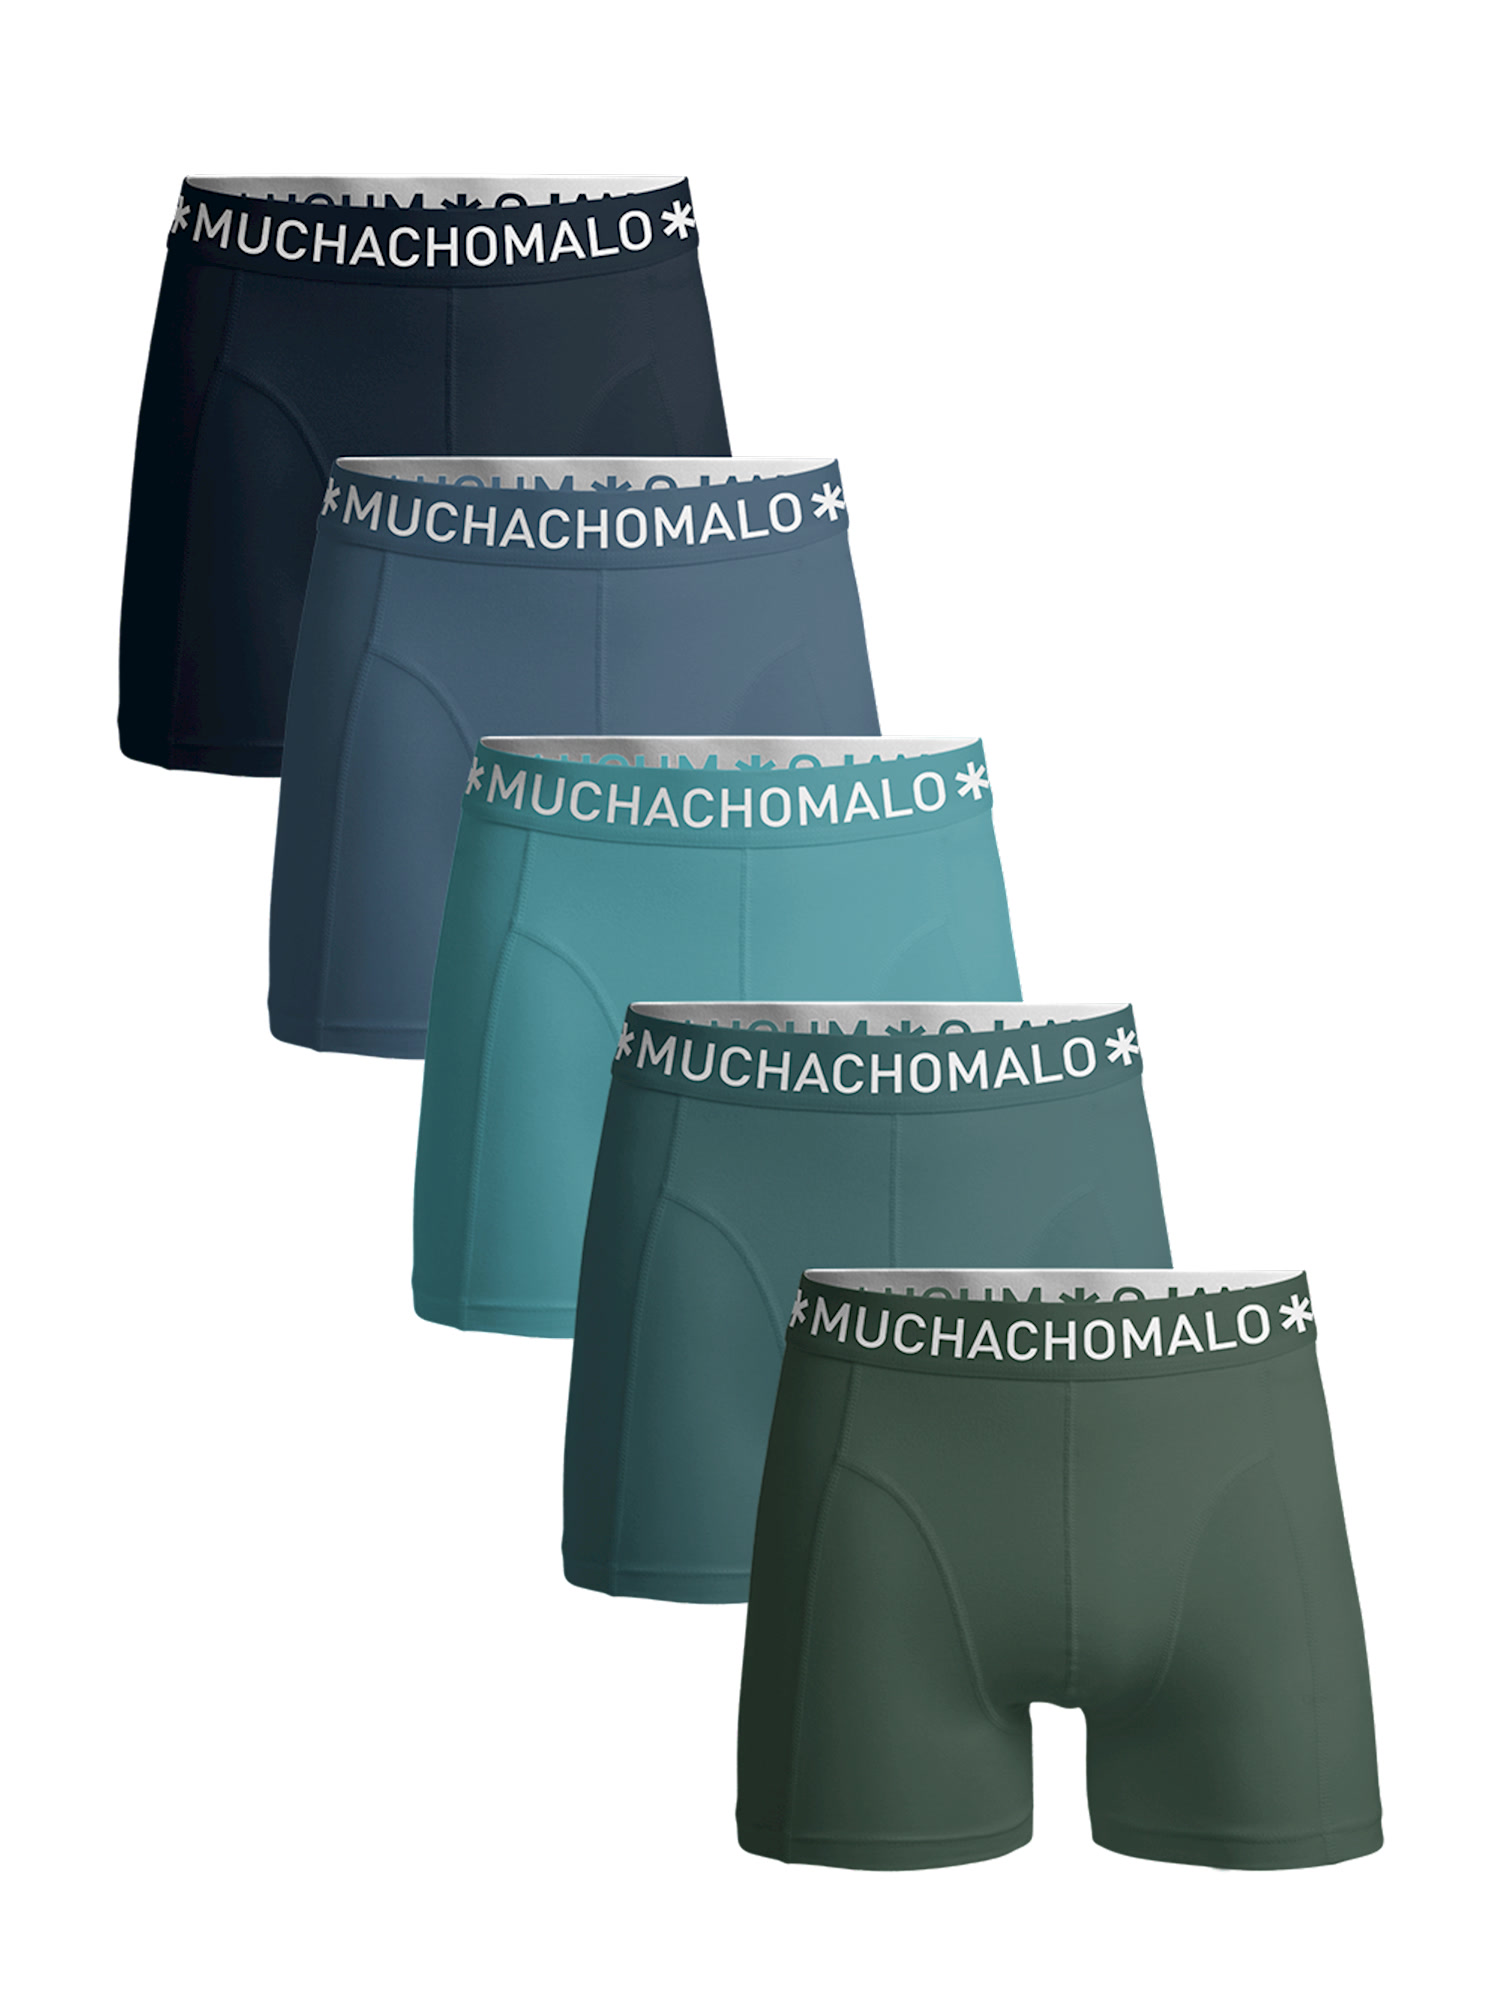 Боксеры Muchachomalo 5er-Set: Boxershorts, цвет Black/Blue/Blue/Green/Green боксеры muchachomalo 2er set boxershorts цвет black black blue blue